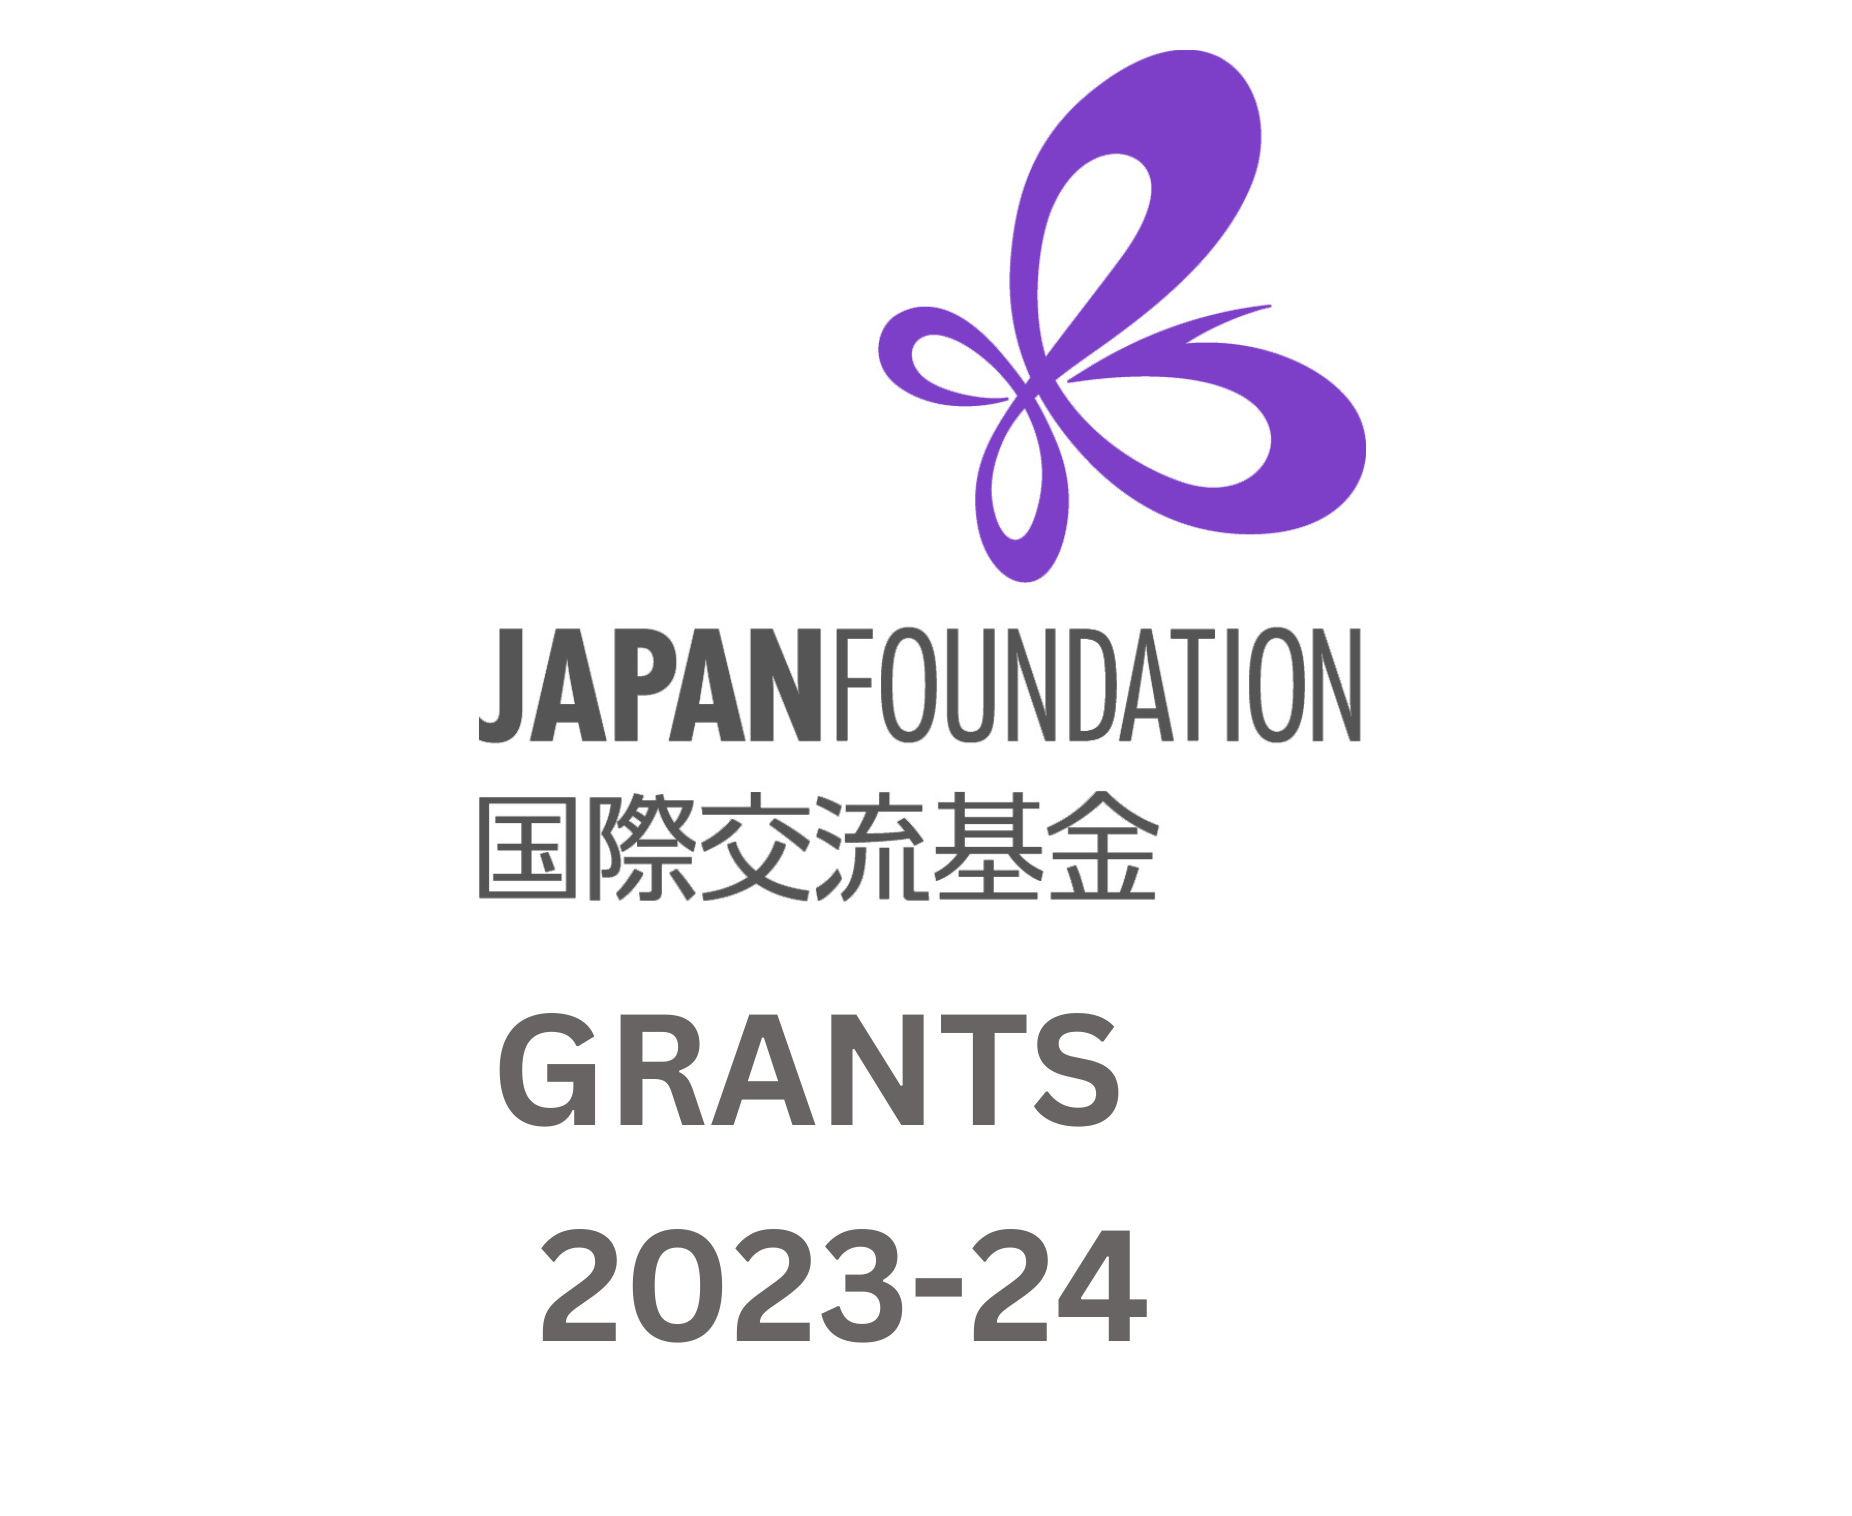 Japan Foundation Grants – 2023